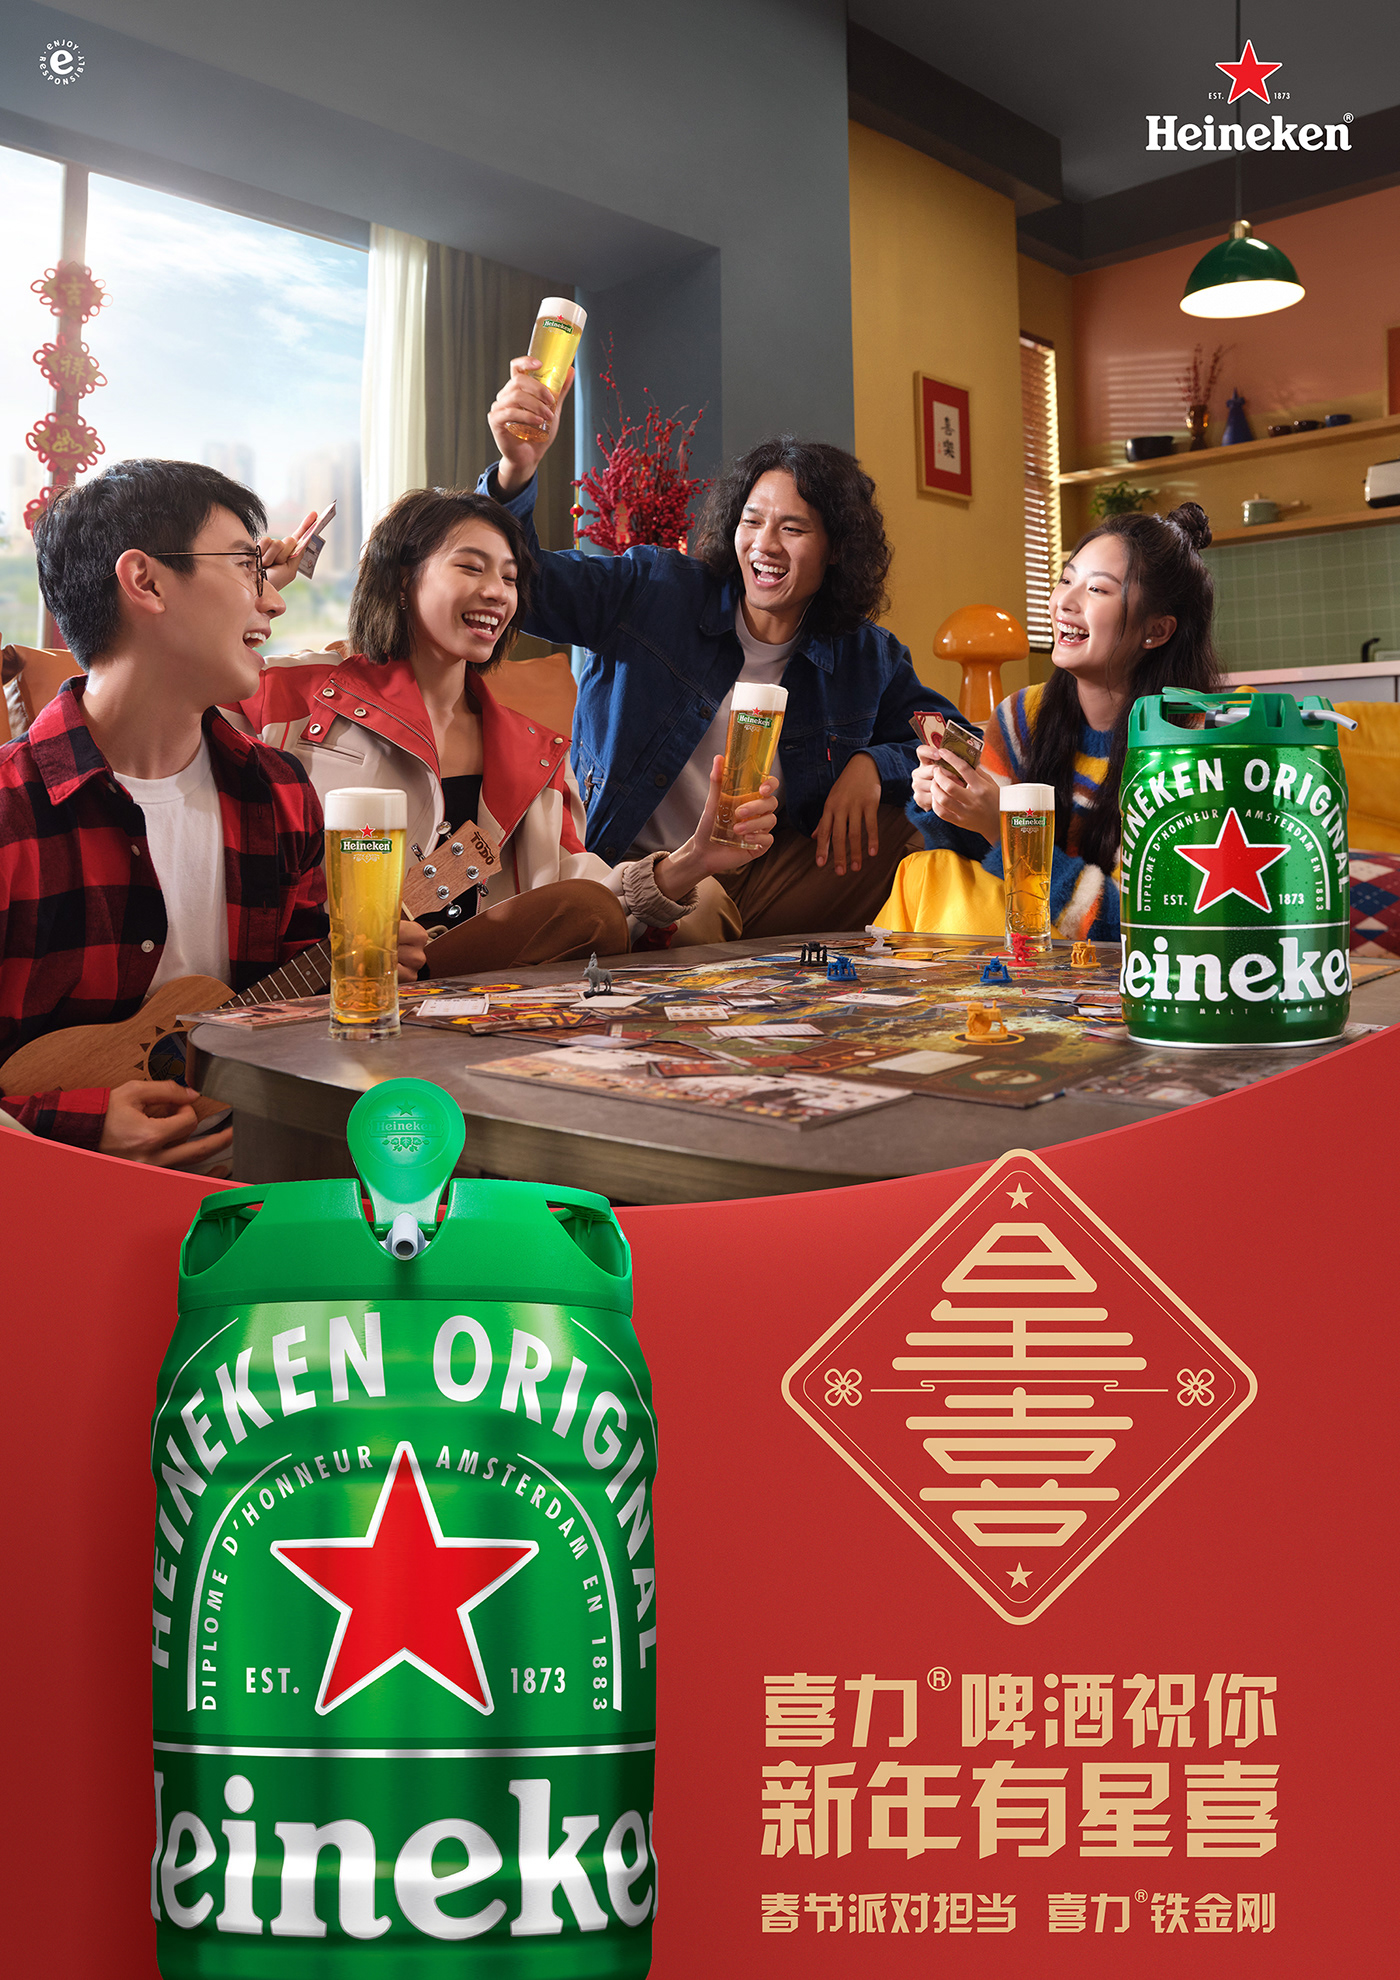 heineken 喜力 chinese new year lifestyle indoor happy friends family beer